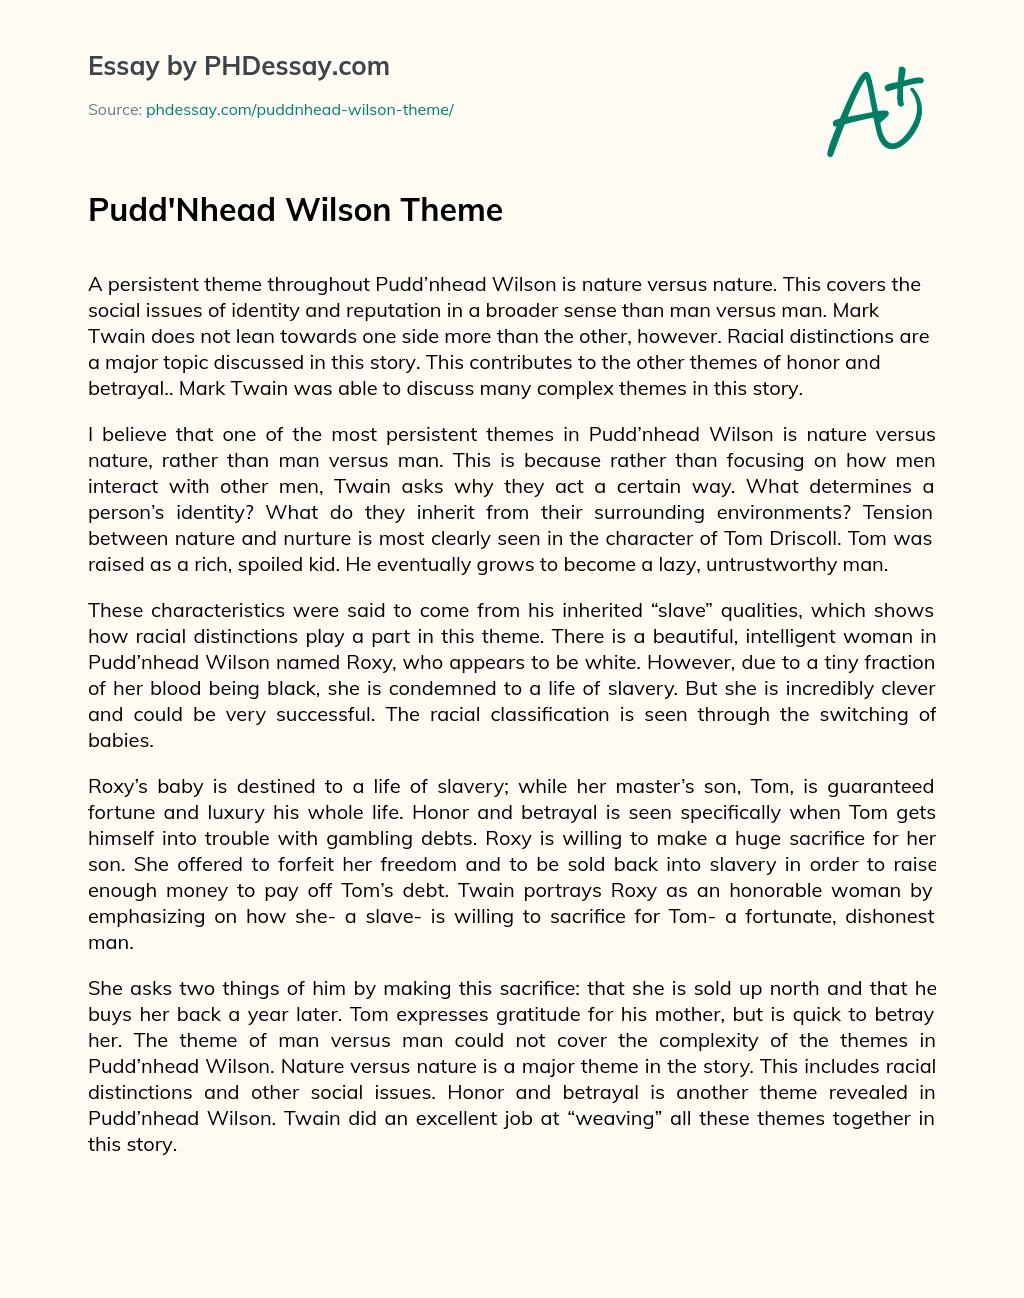 Pudd’Nhead Wilson Theme essay